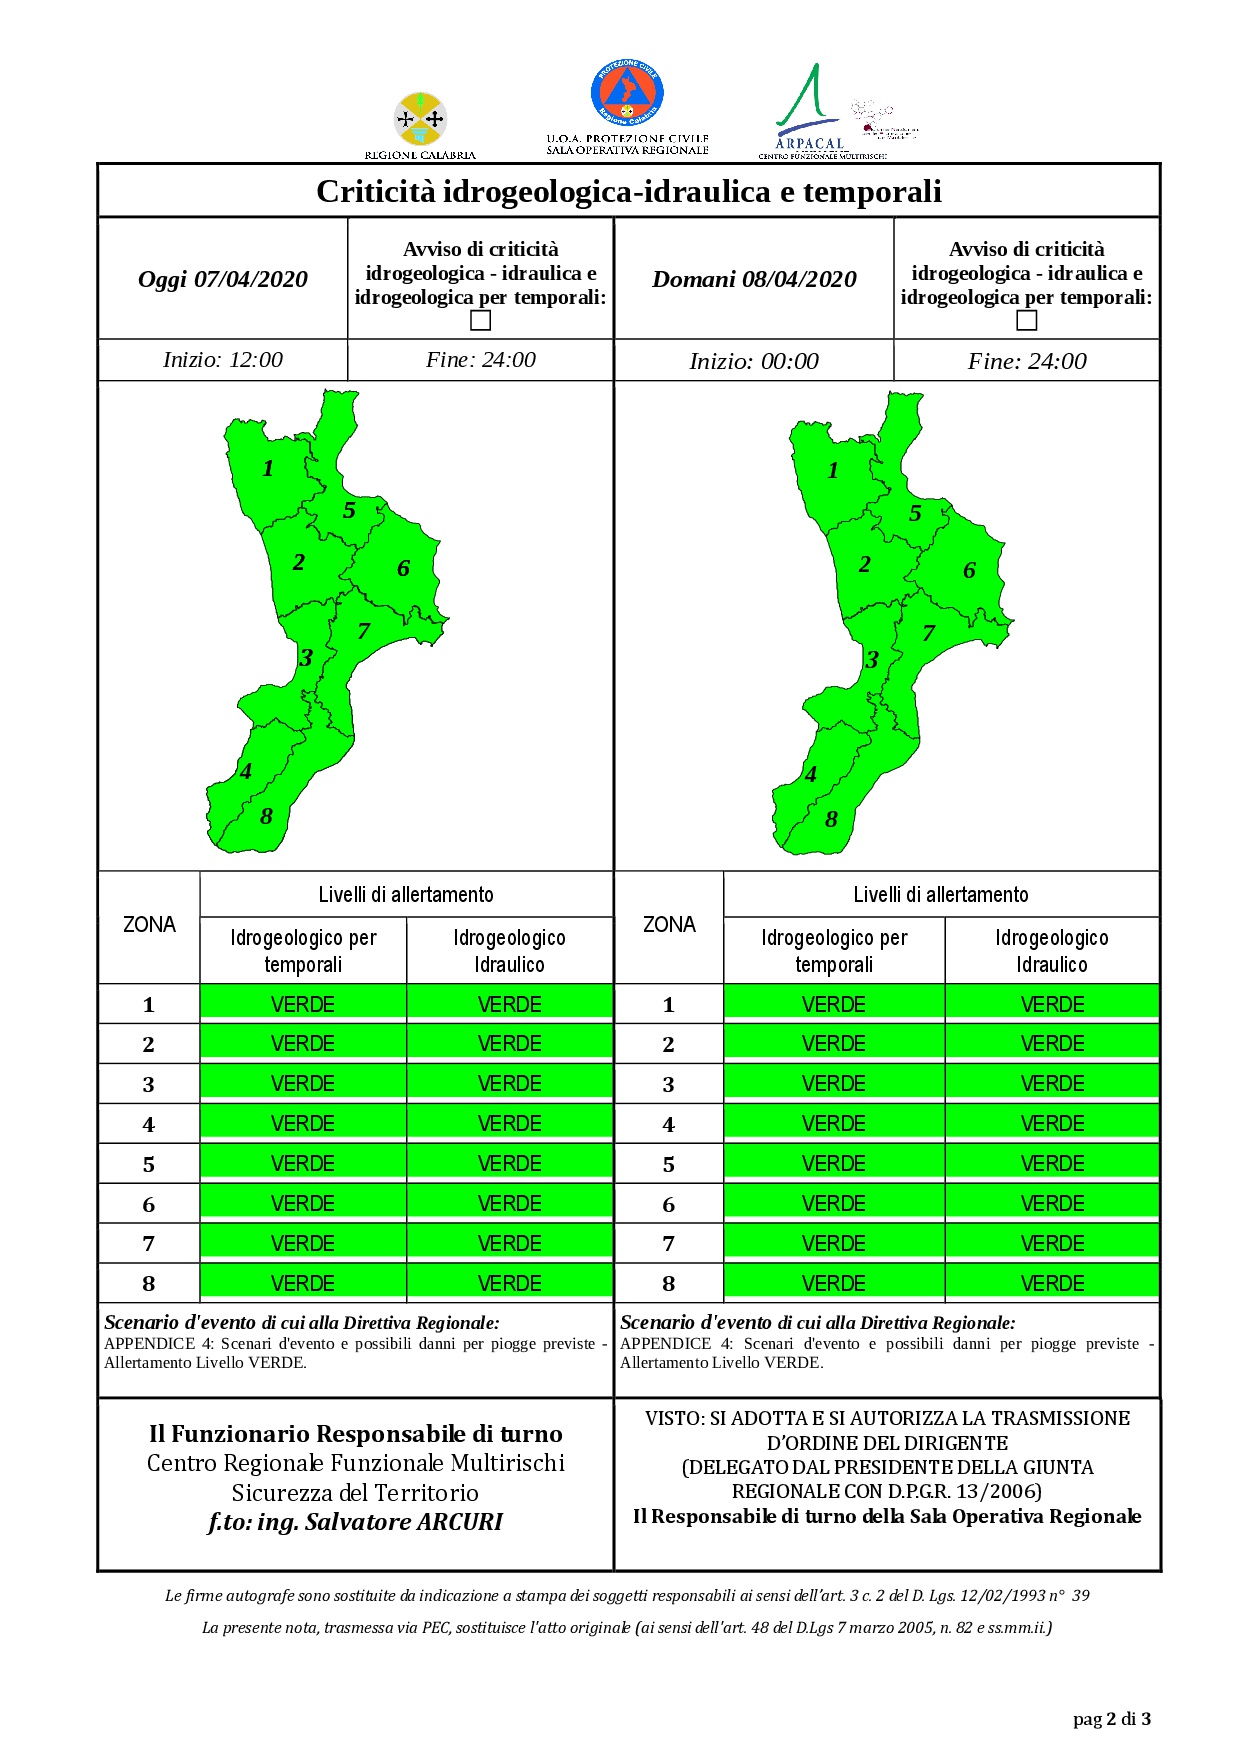 Criticità idrogeologica-idraulica e temporali in Calabria 07-04-2020